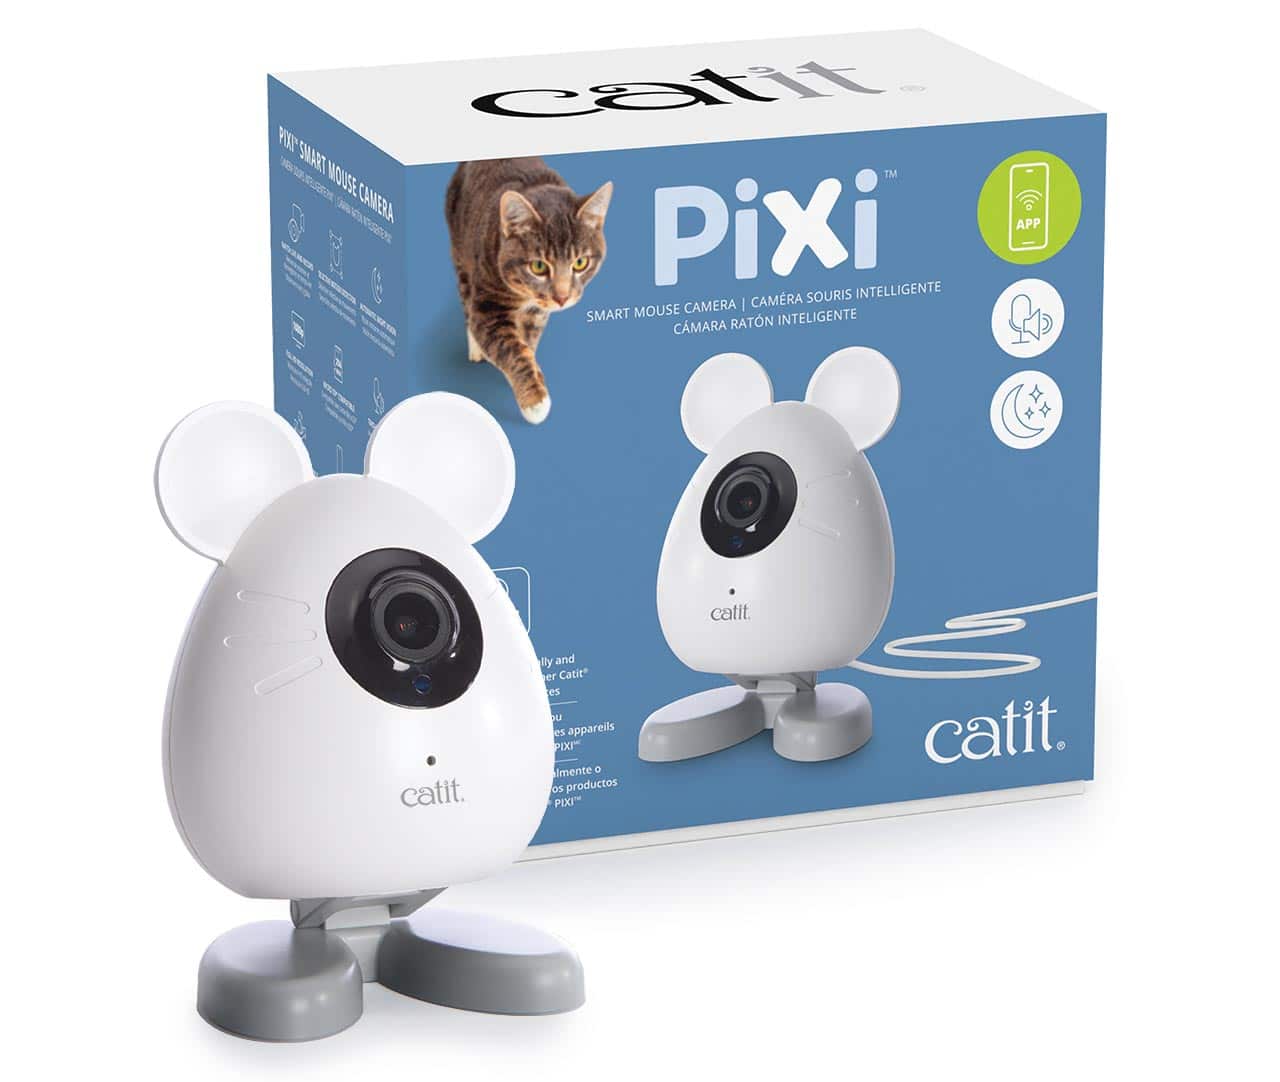 Catit PIXI Smart Mouse Camera verpakking